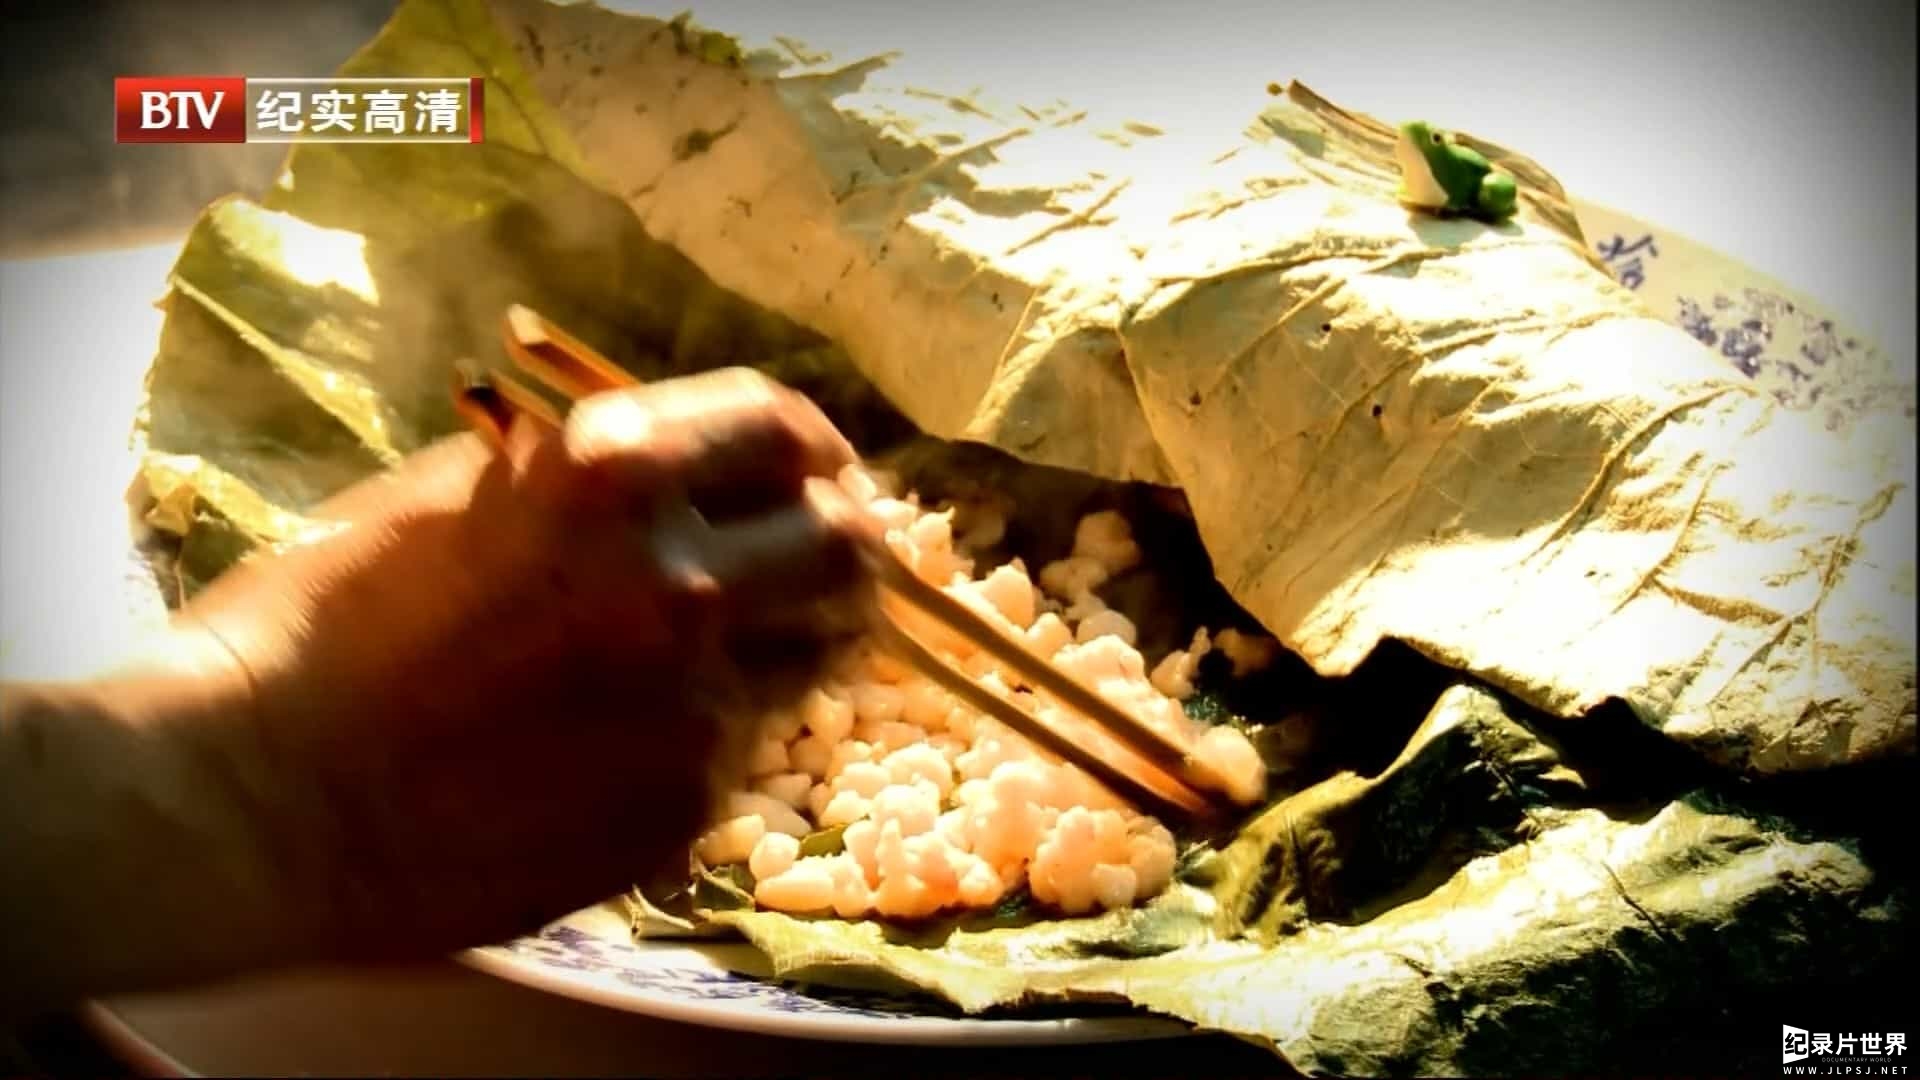 BTV大型人文纪录片/中国美食系列《江南味道 A Bite of Jiangnan》全8集 